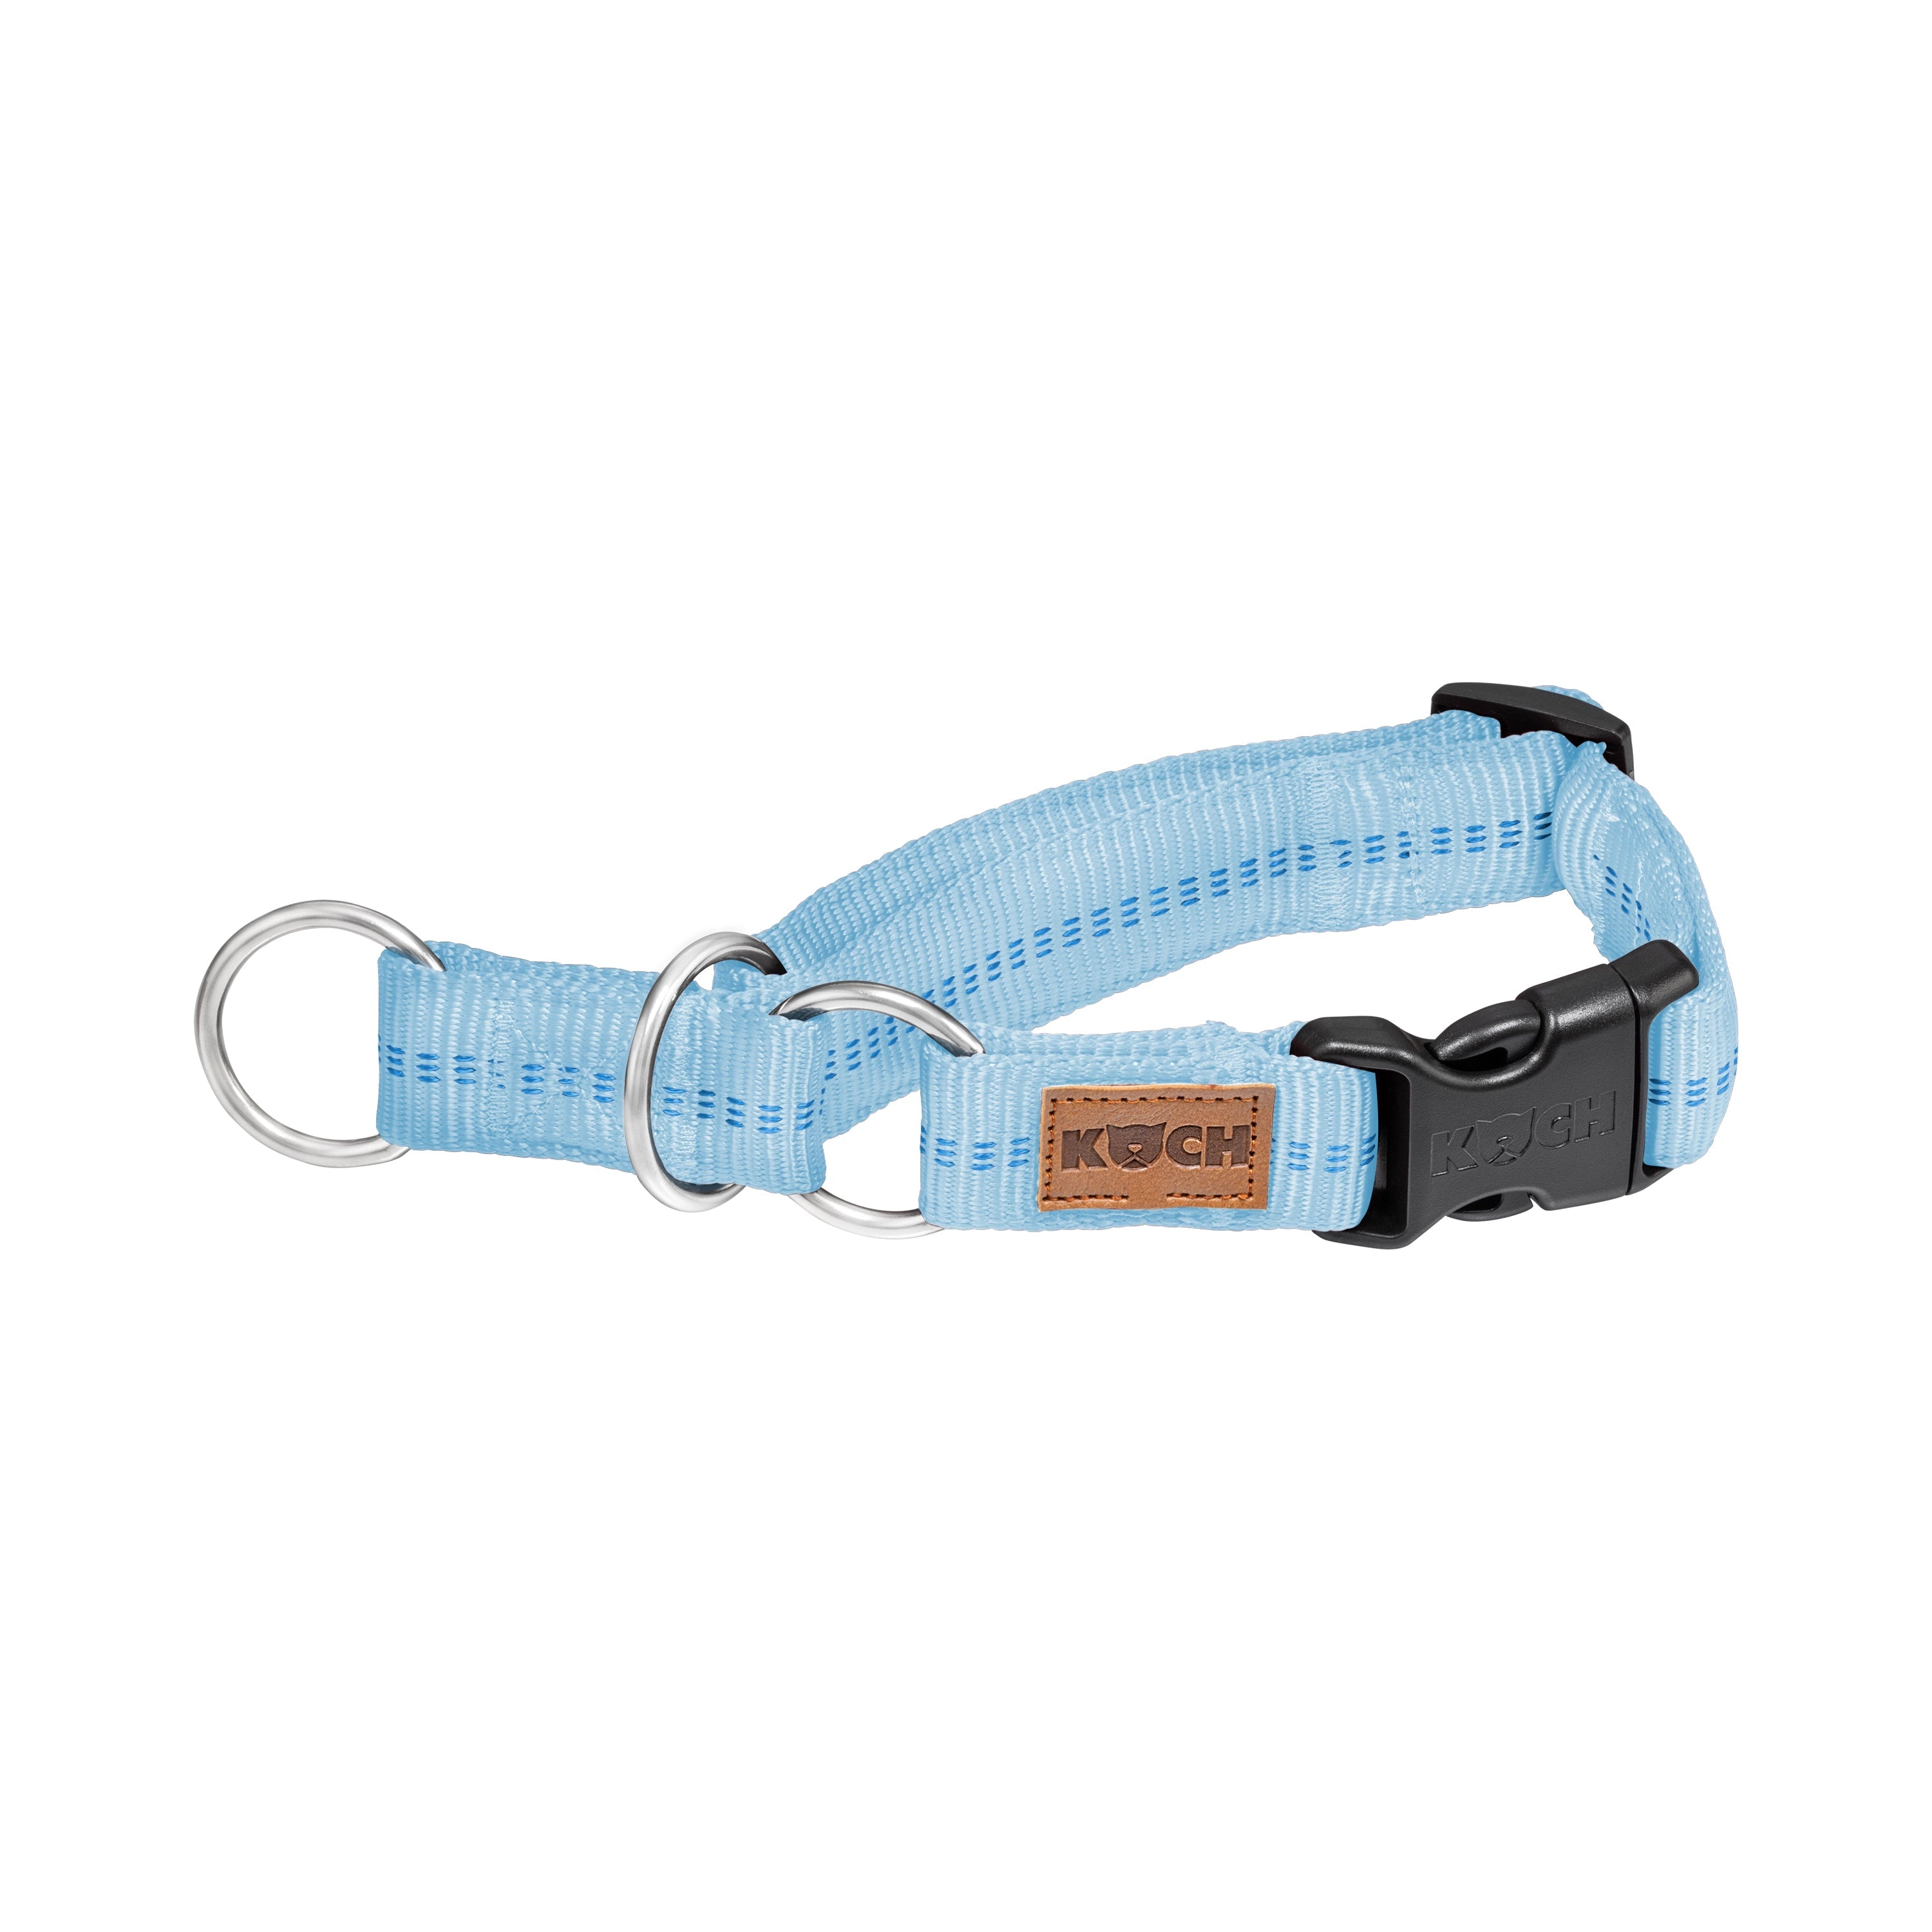 KOCH Premium Zugstopp-Halsband gepolstert hellblau mit Kennfäden #farbe_hellblau mit Kennfäden